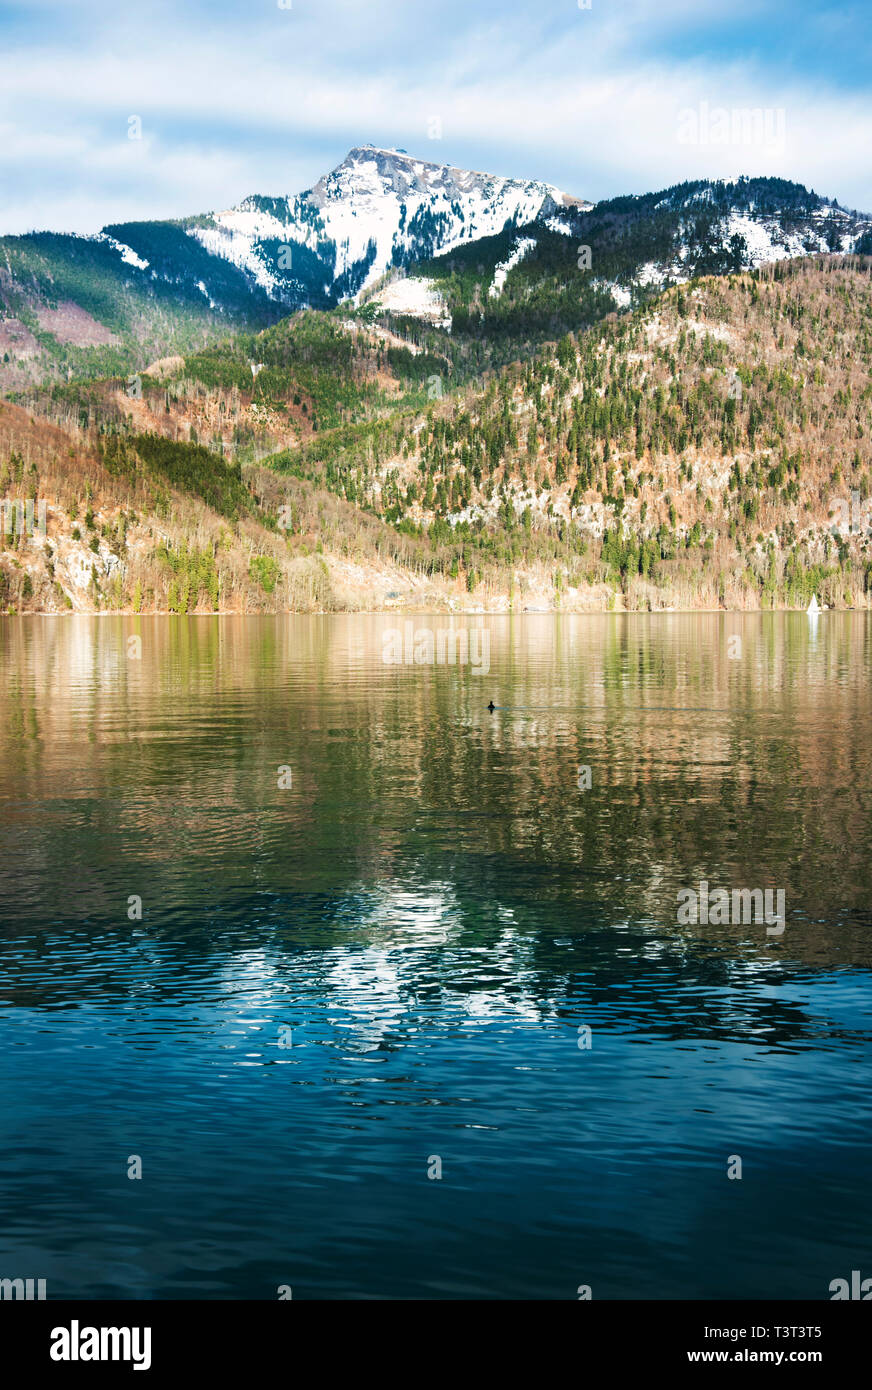 Reflections of a Mountain in Lake Wolfgang, Saint Gilgen, Austria Stock Photo